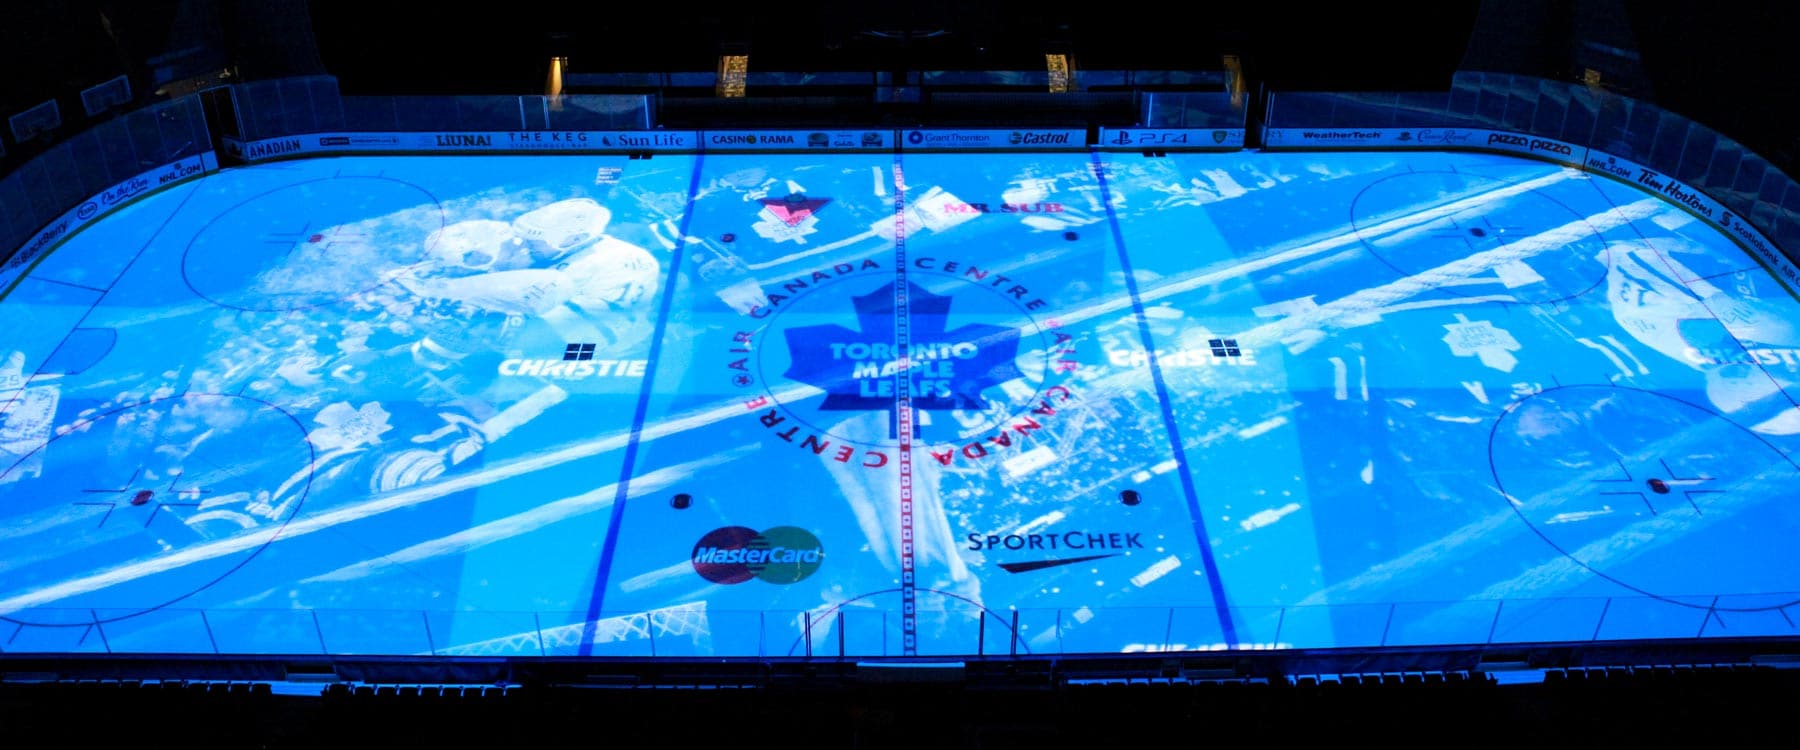 Maple Leafs Pre-Game Warm Up - playlist by klipschaudiocan